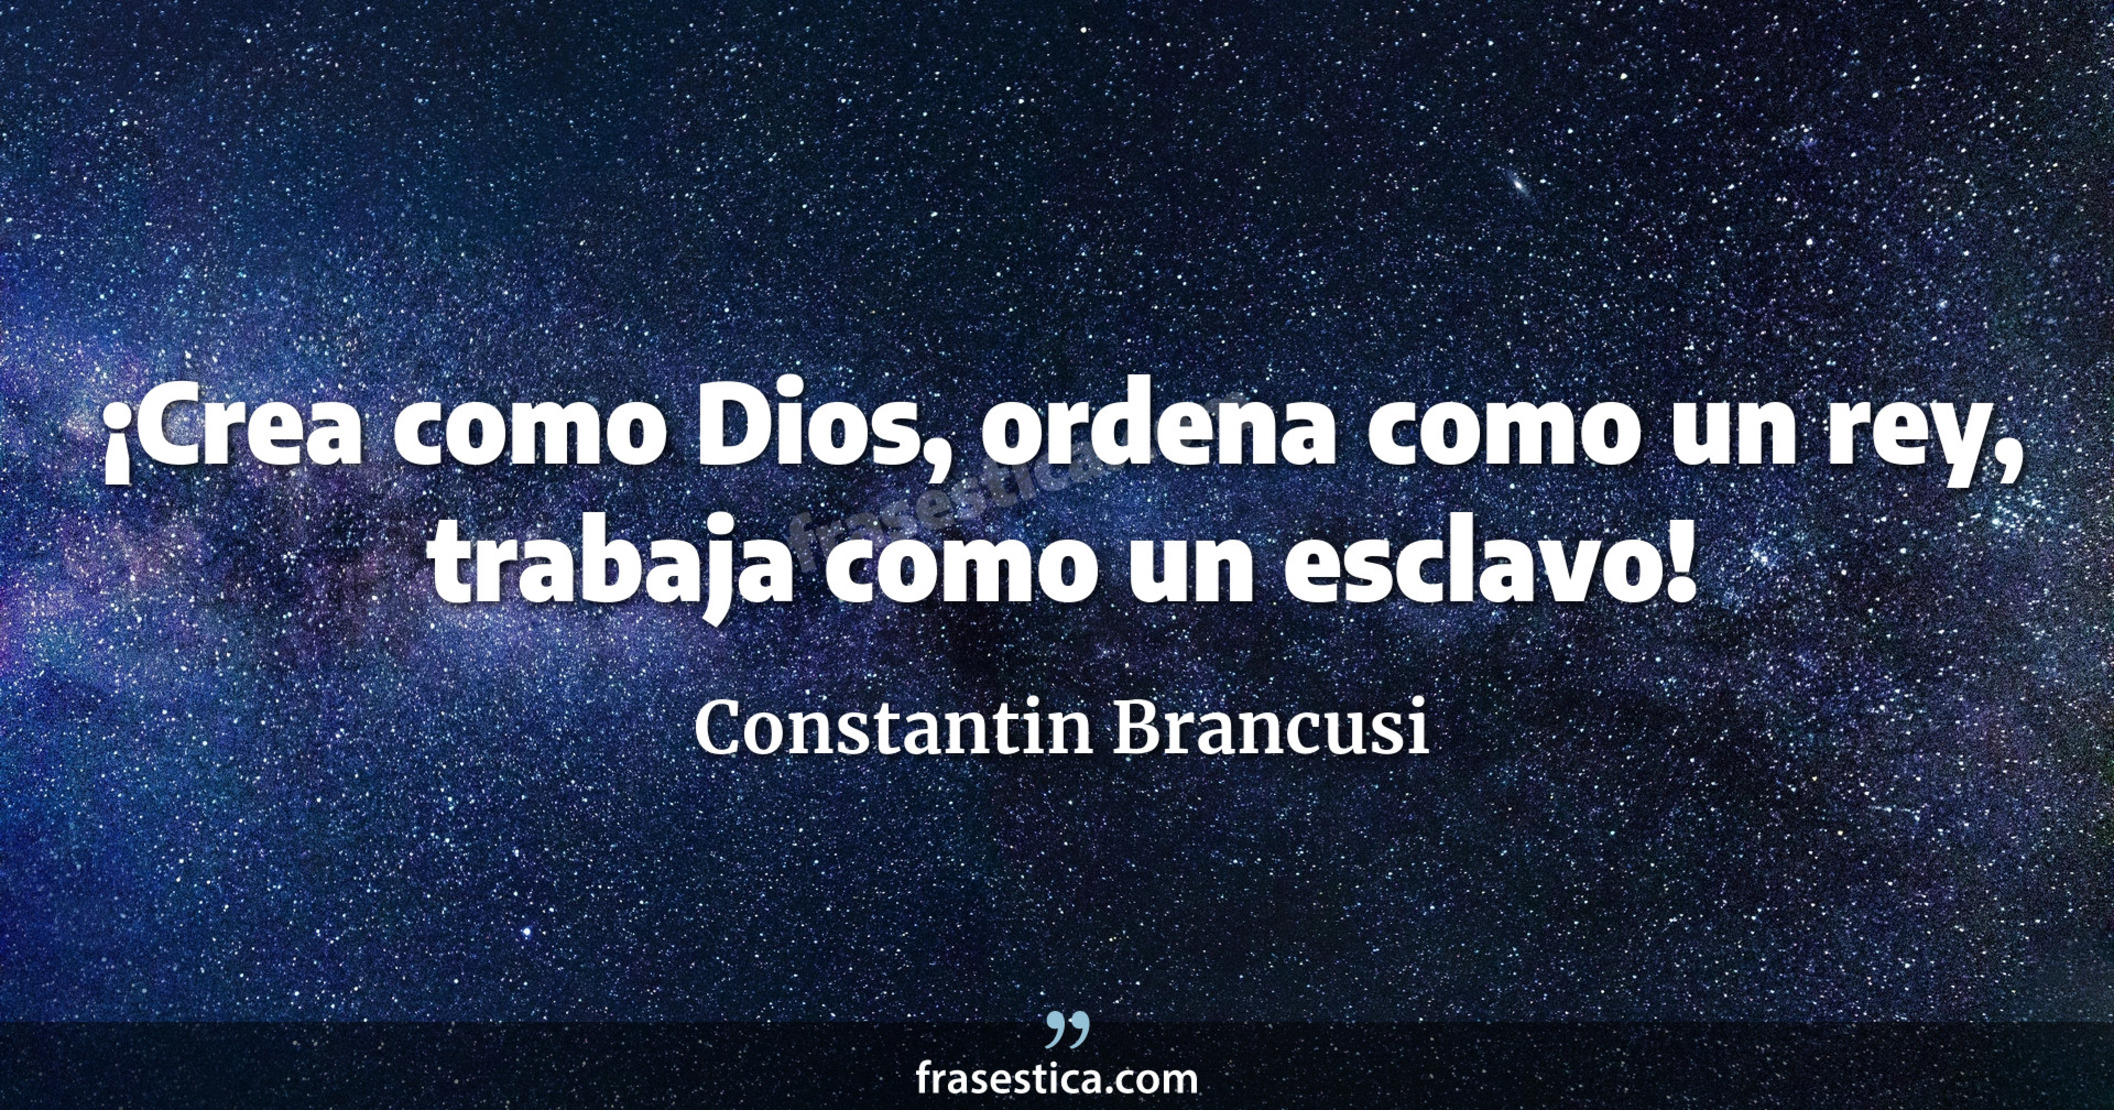 ¡Crea como Dios, ordena como un rey, trabaja como un esclavo! - Constantin Brancusi